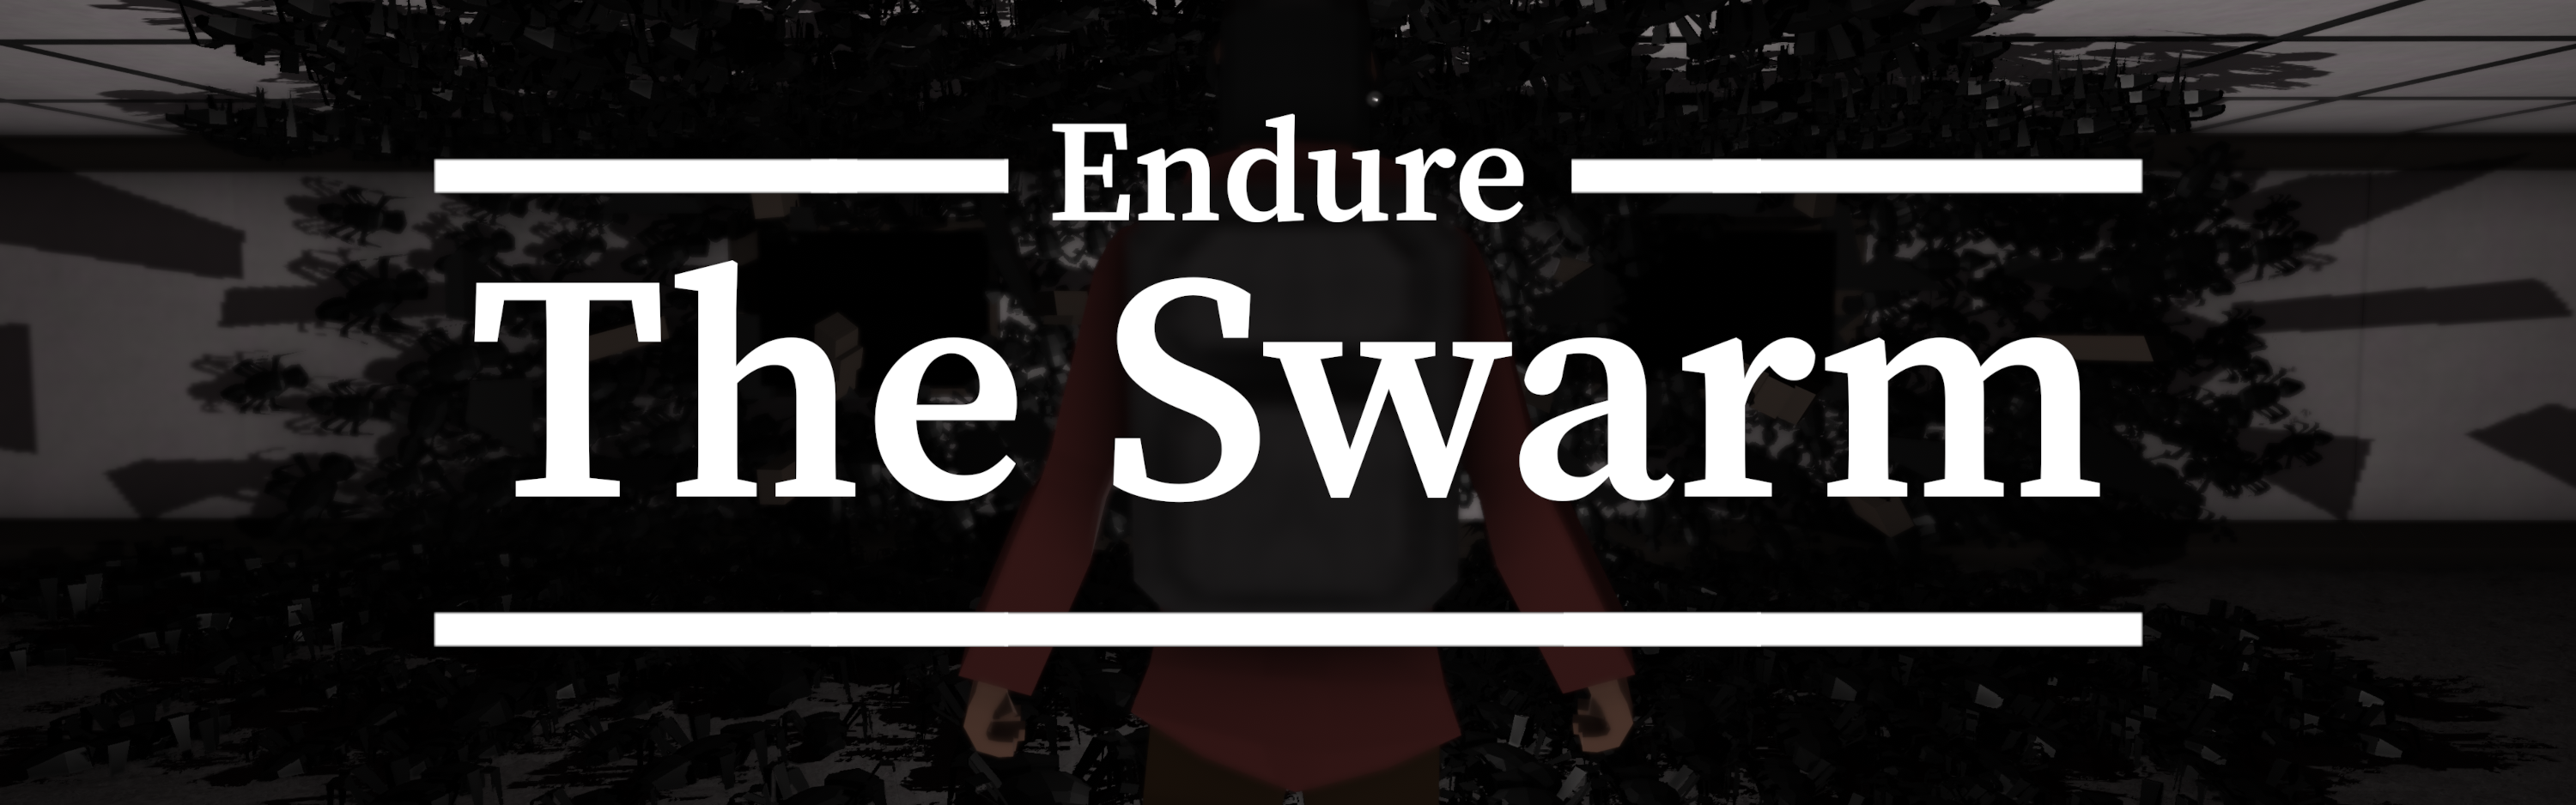 Endure The Swarm